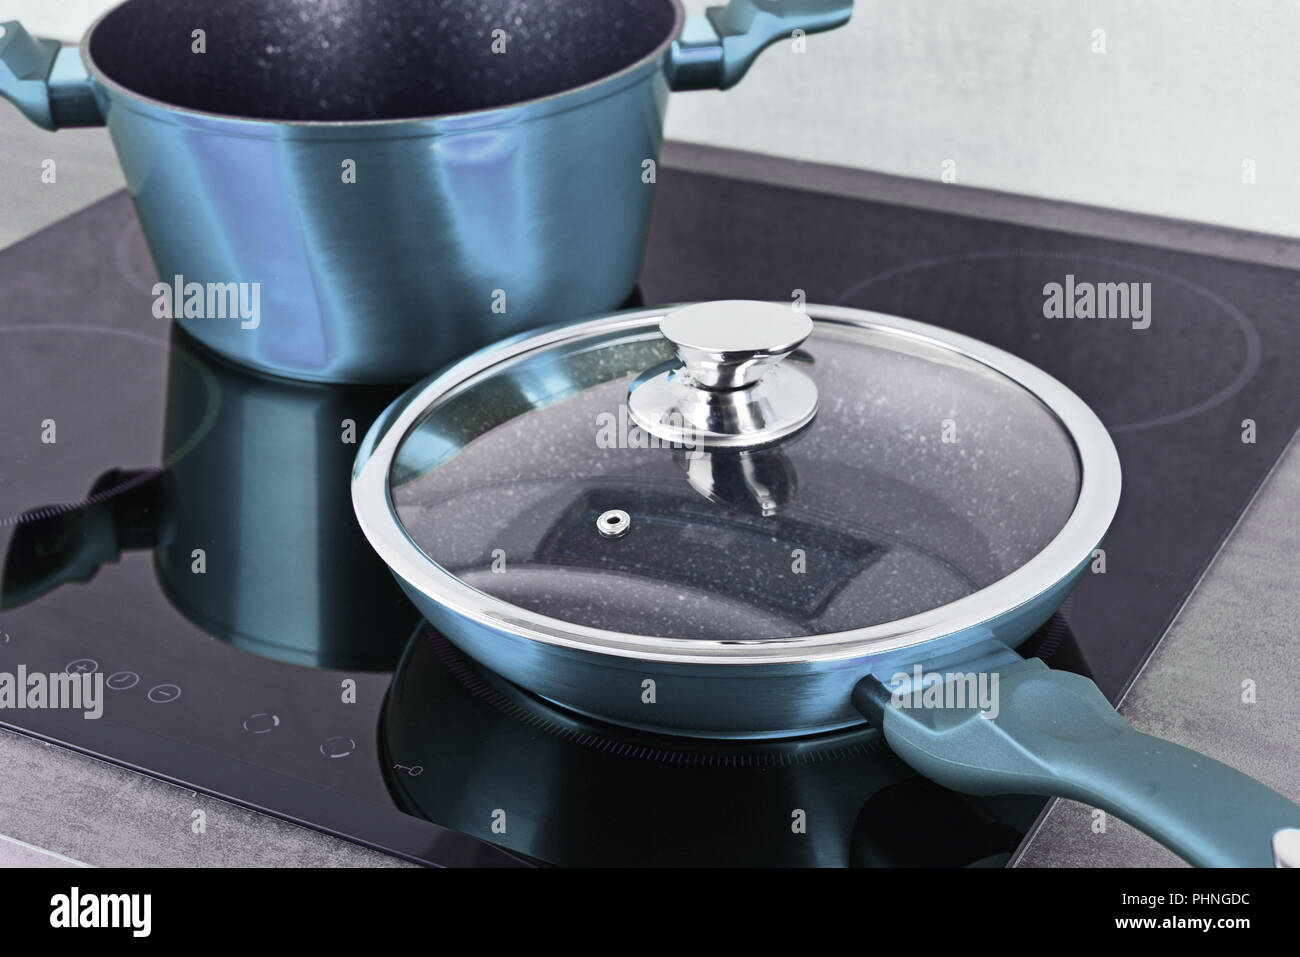 https://c8.alamy.com/comp/PHNGDC/frying-pan-and-steel-pot-on-modern-induction-cooktop-PHNGDC.jpg